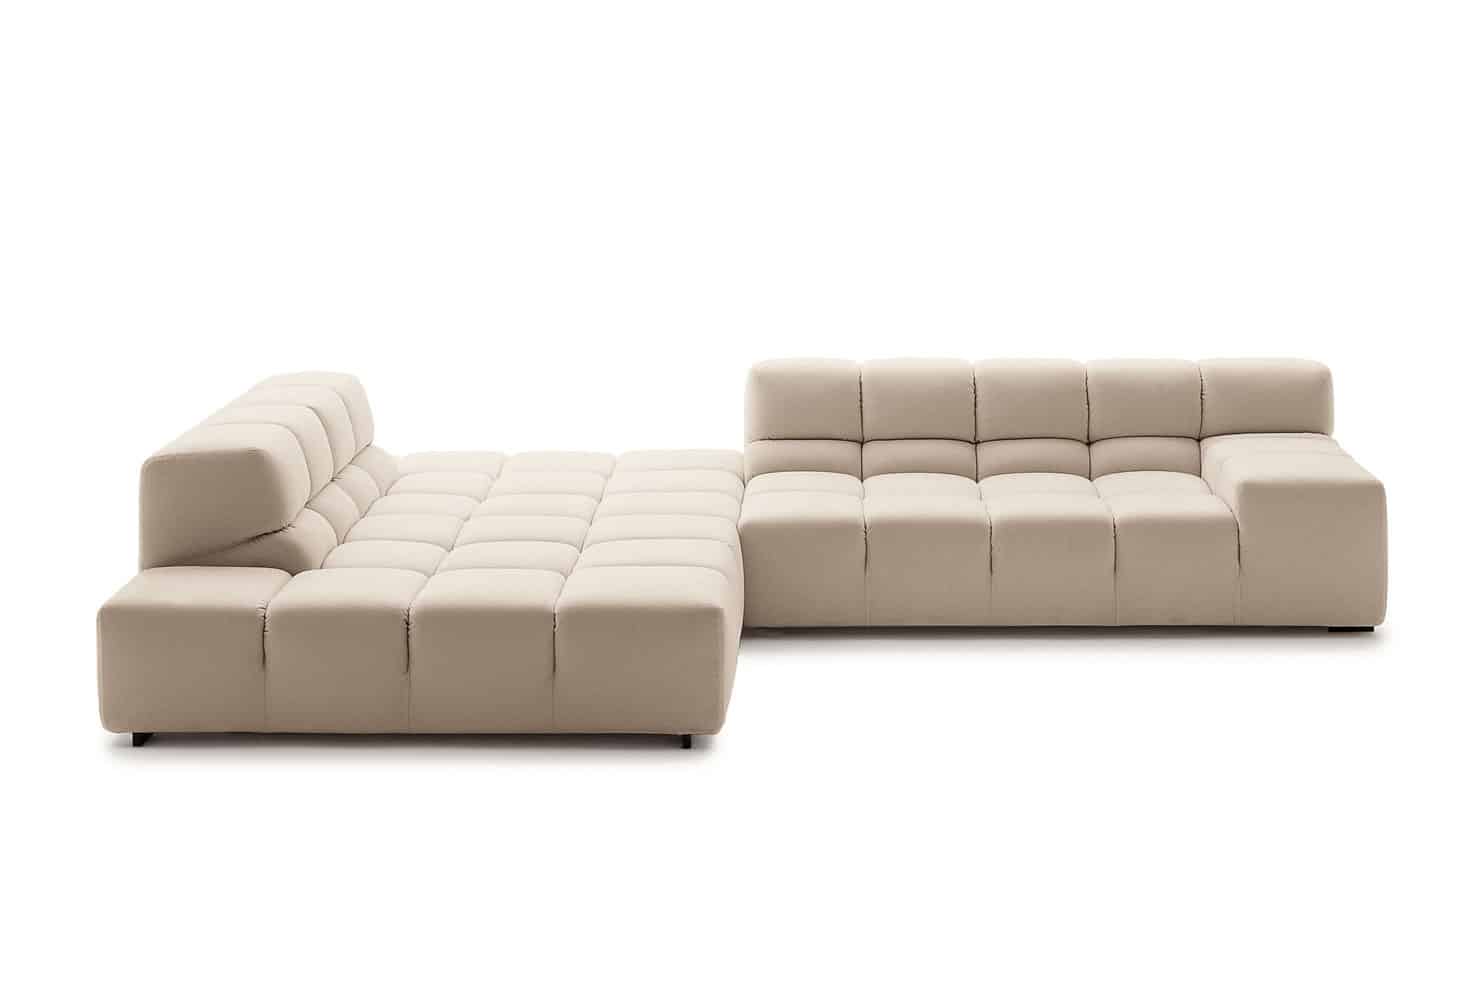 original-tufty-time-sofa-bb-italia-5.jpg